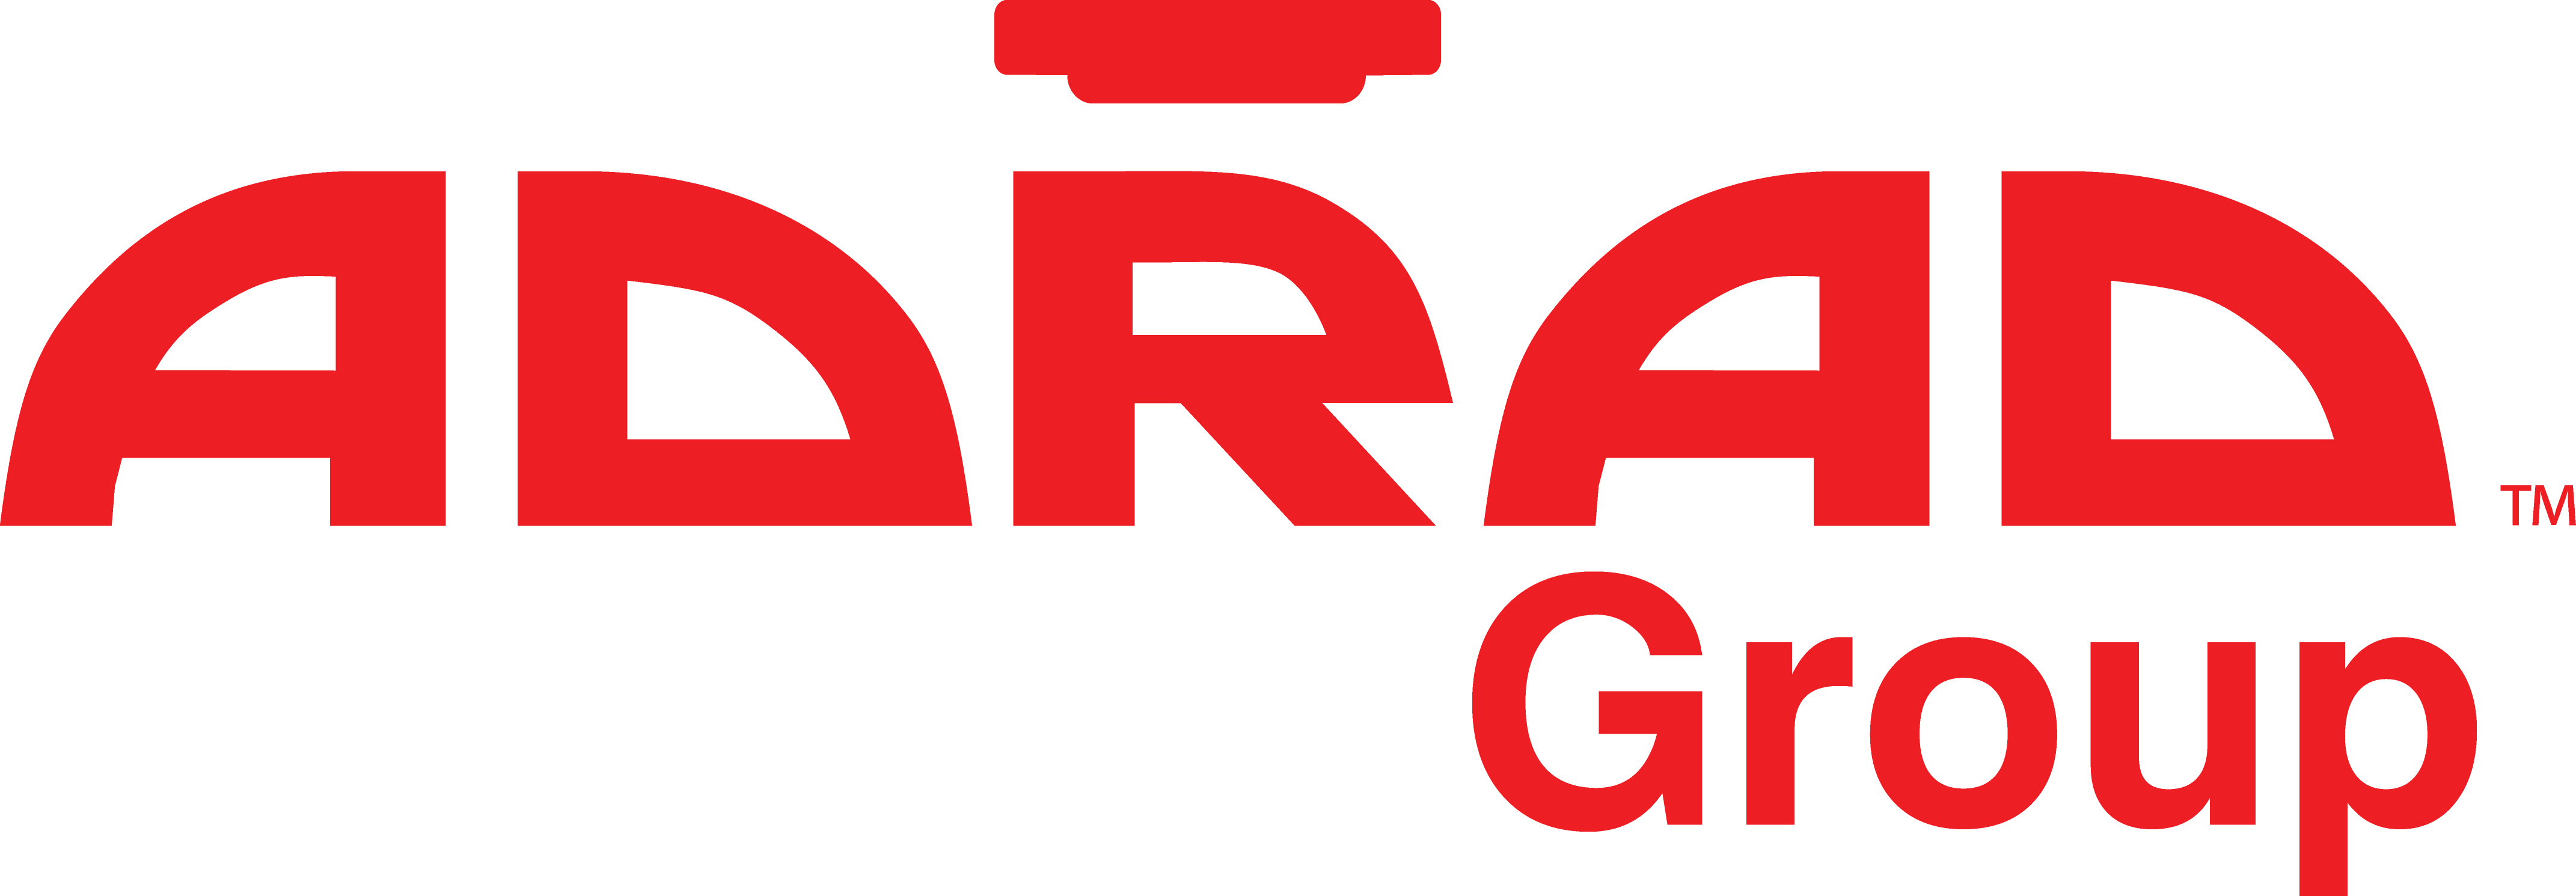 Adrad Group logo.png